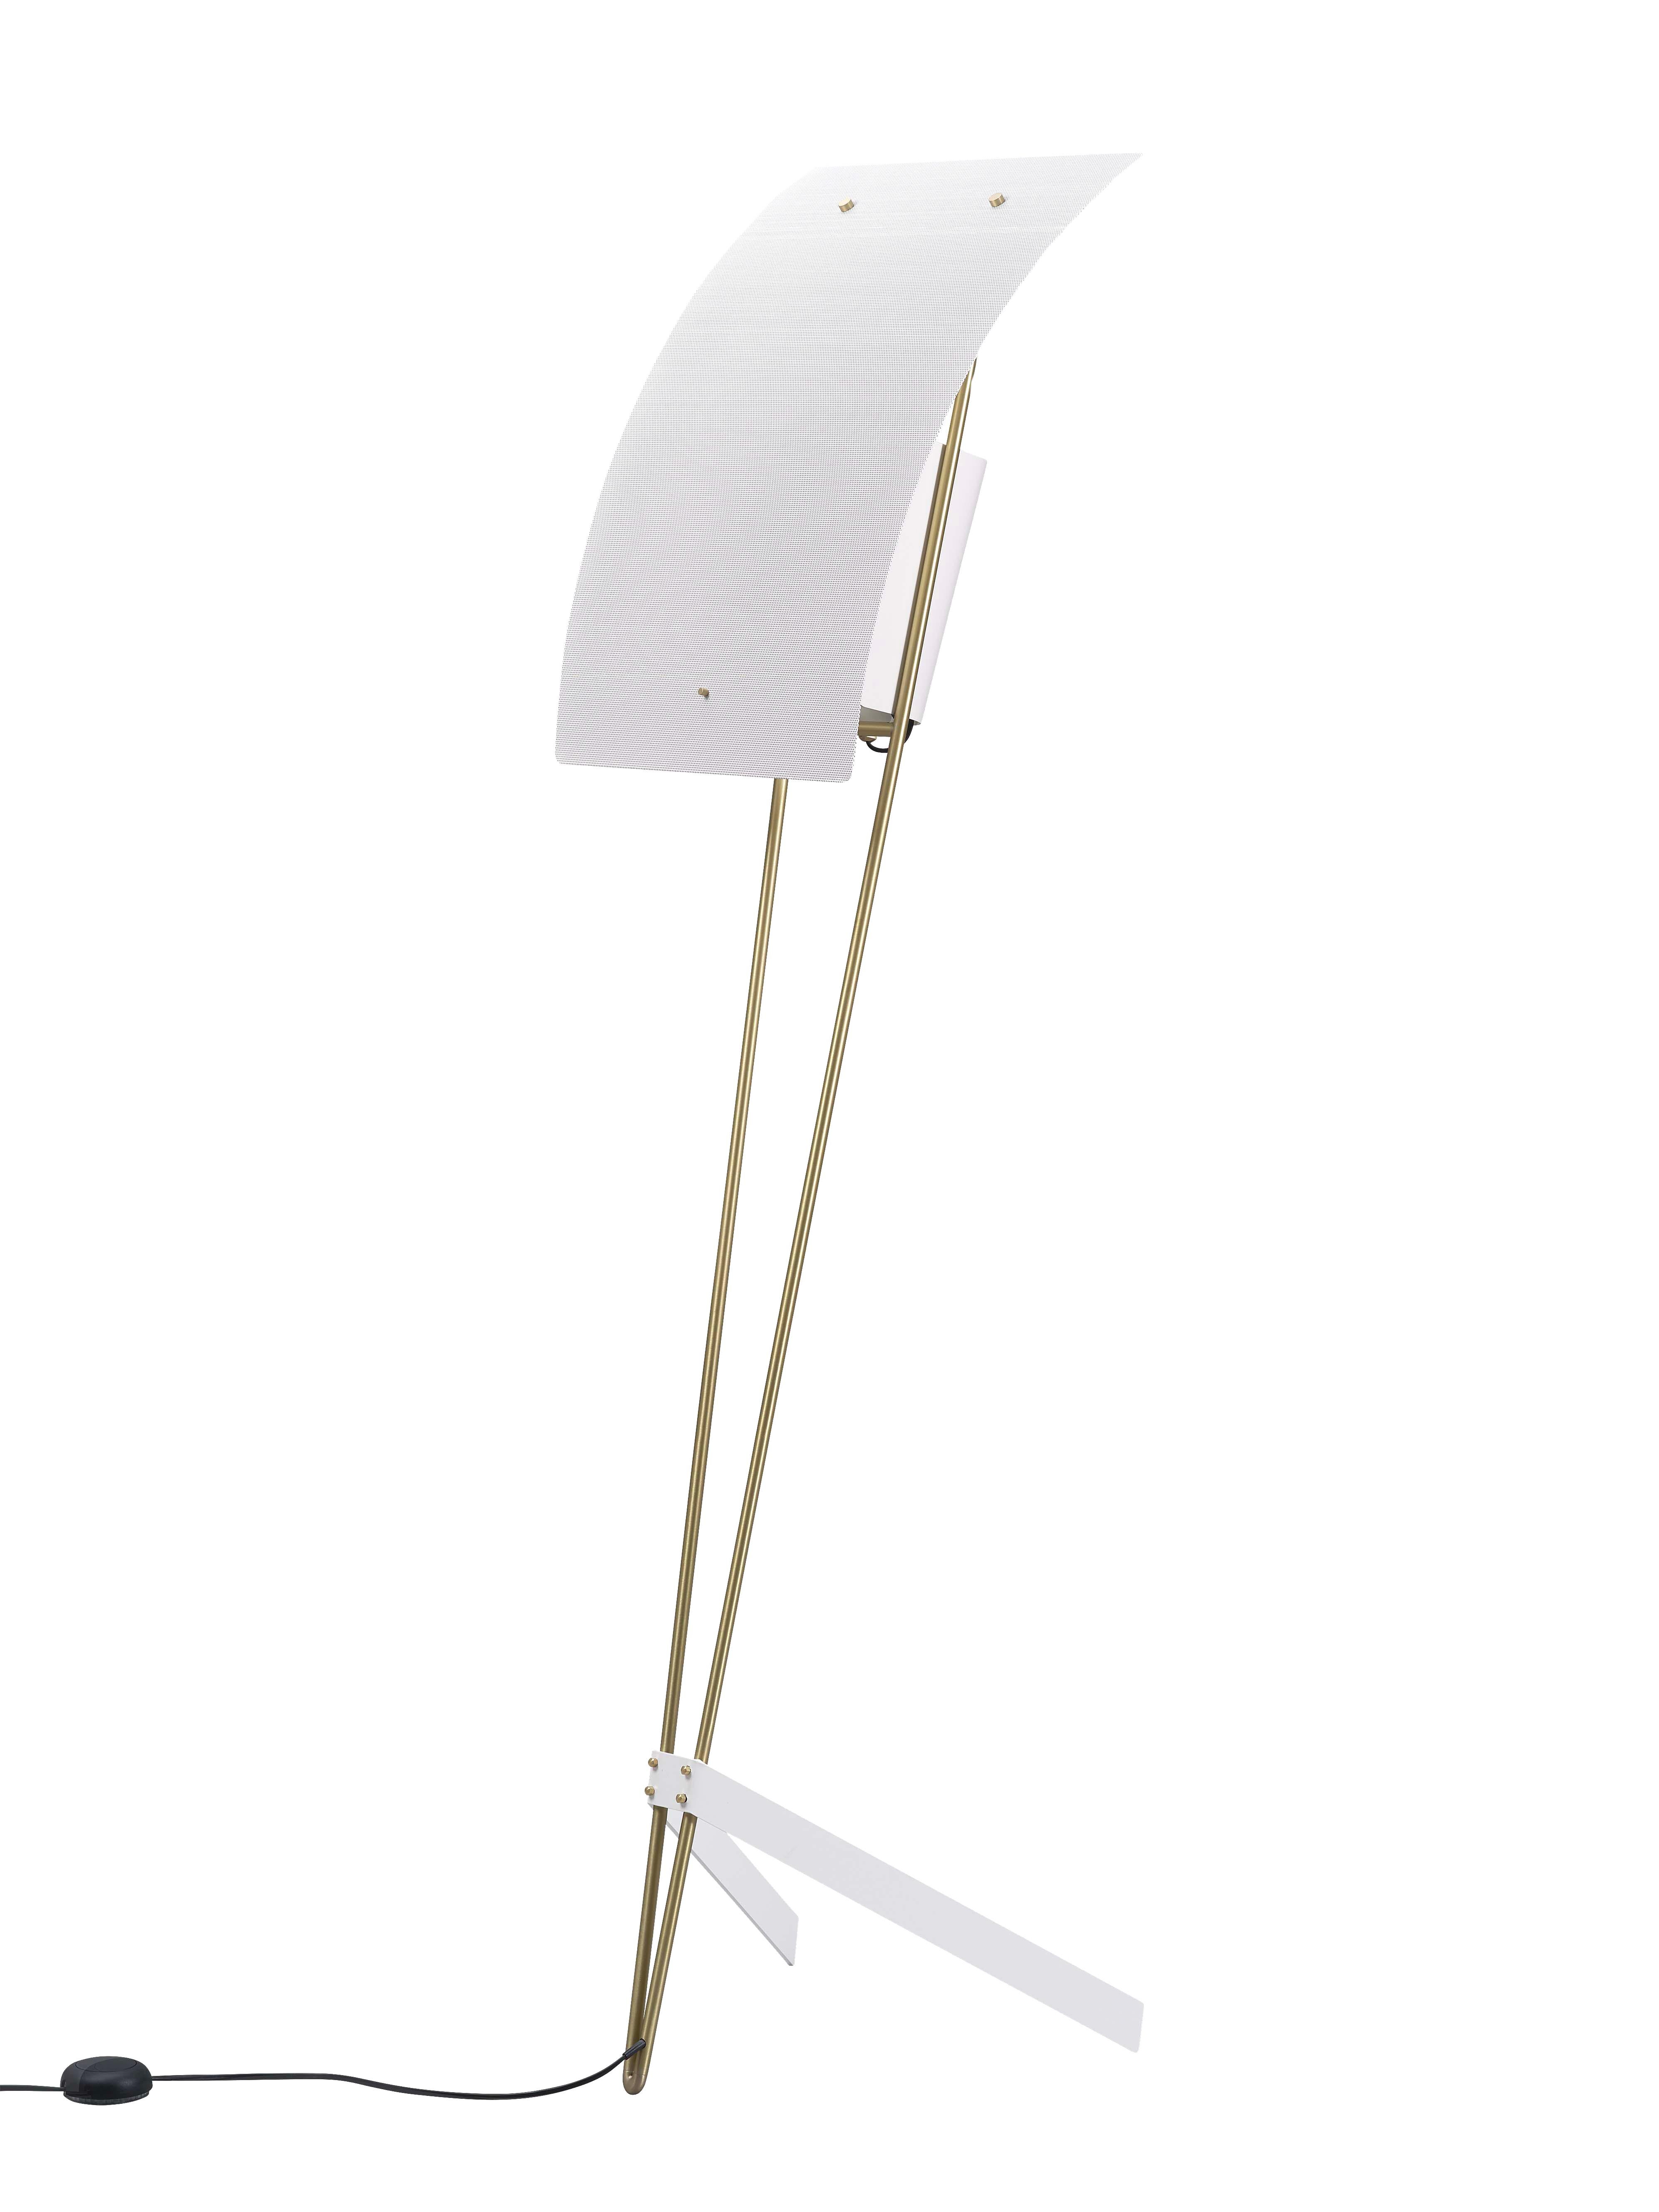 French Pierre Guariche Kite Floor Lamp in White for Sammode Studio For Sale